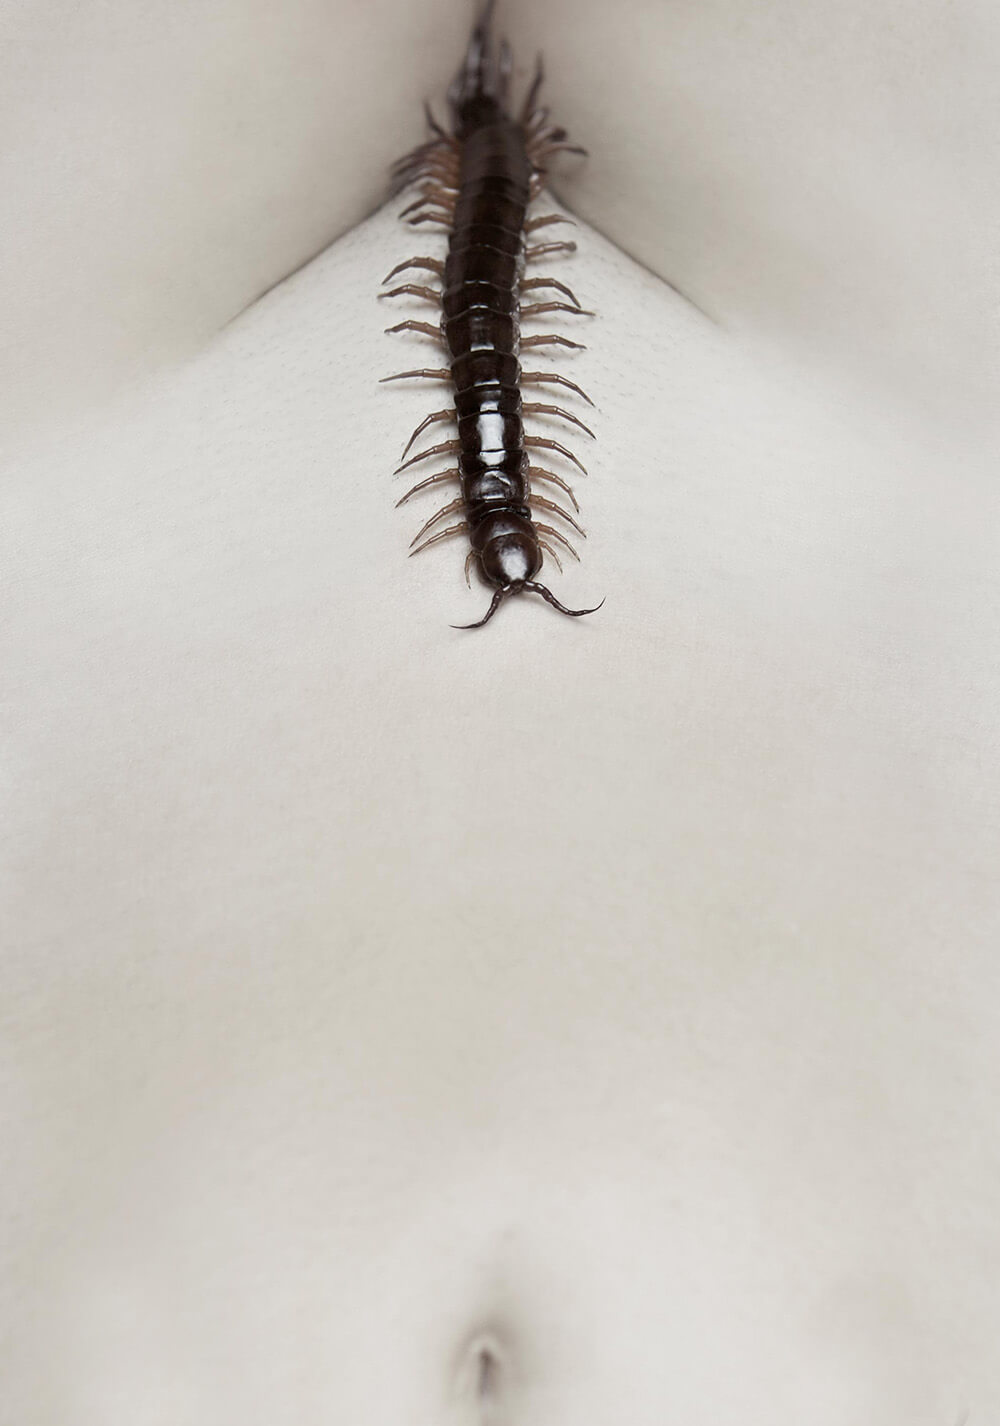 هزارپای انسانی 2 (The Human Centipede 2)